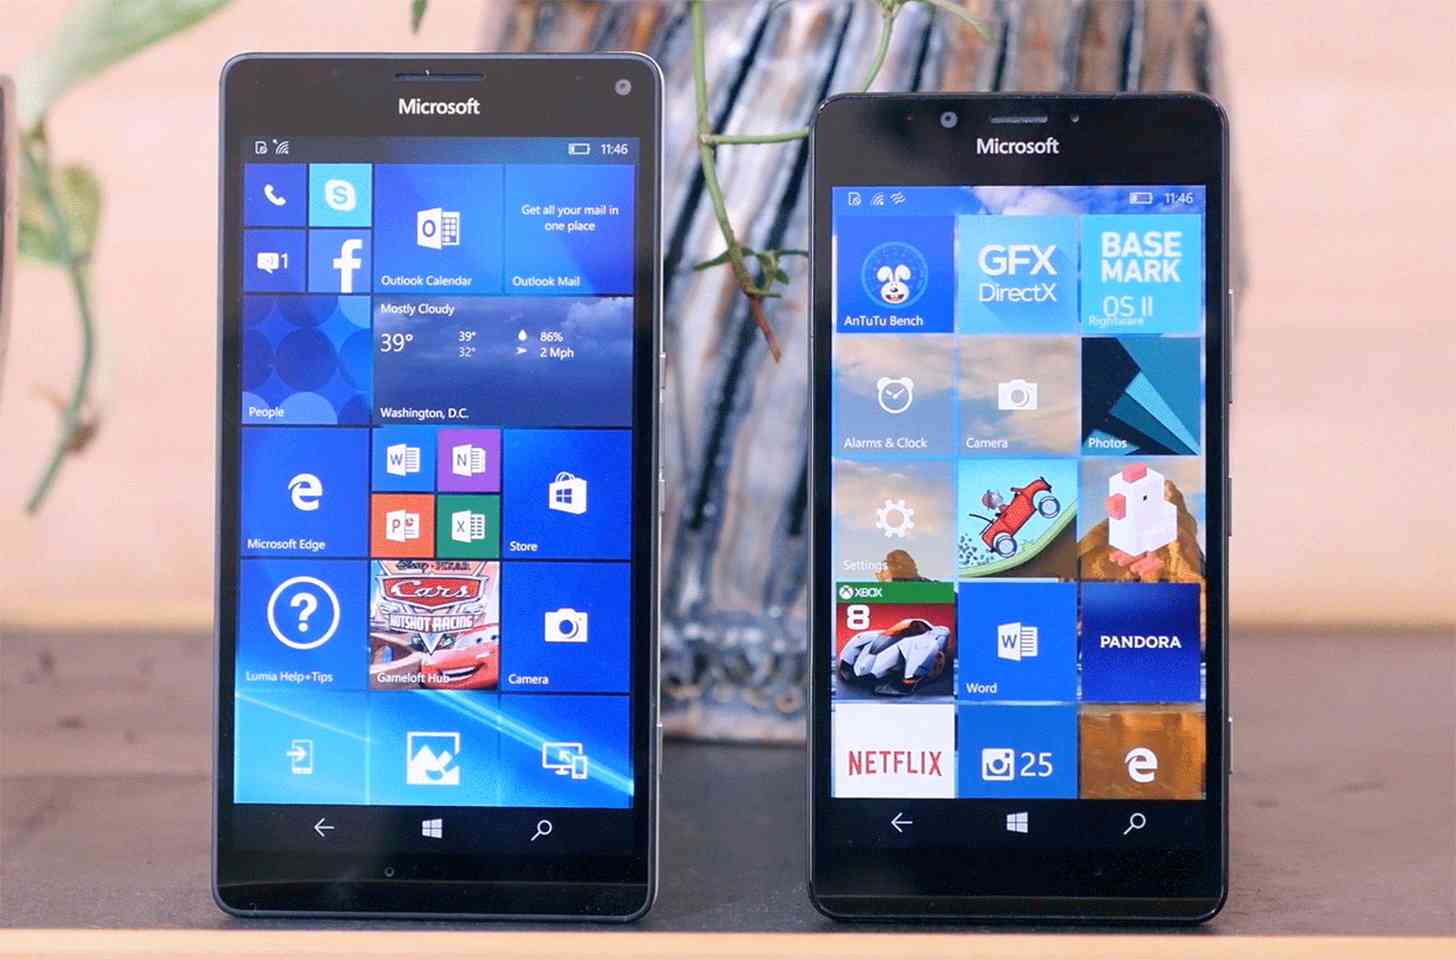 Microsoft Lumia 950 XL, Lumia 950 hands-on